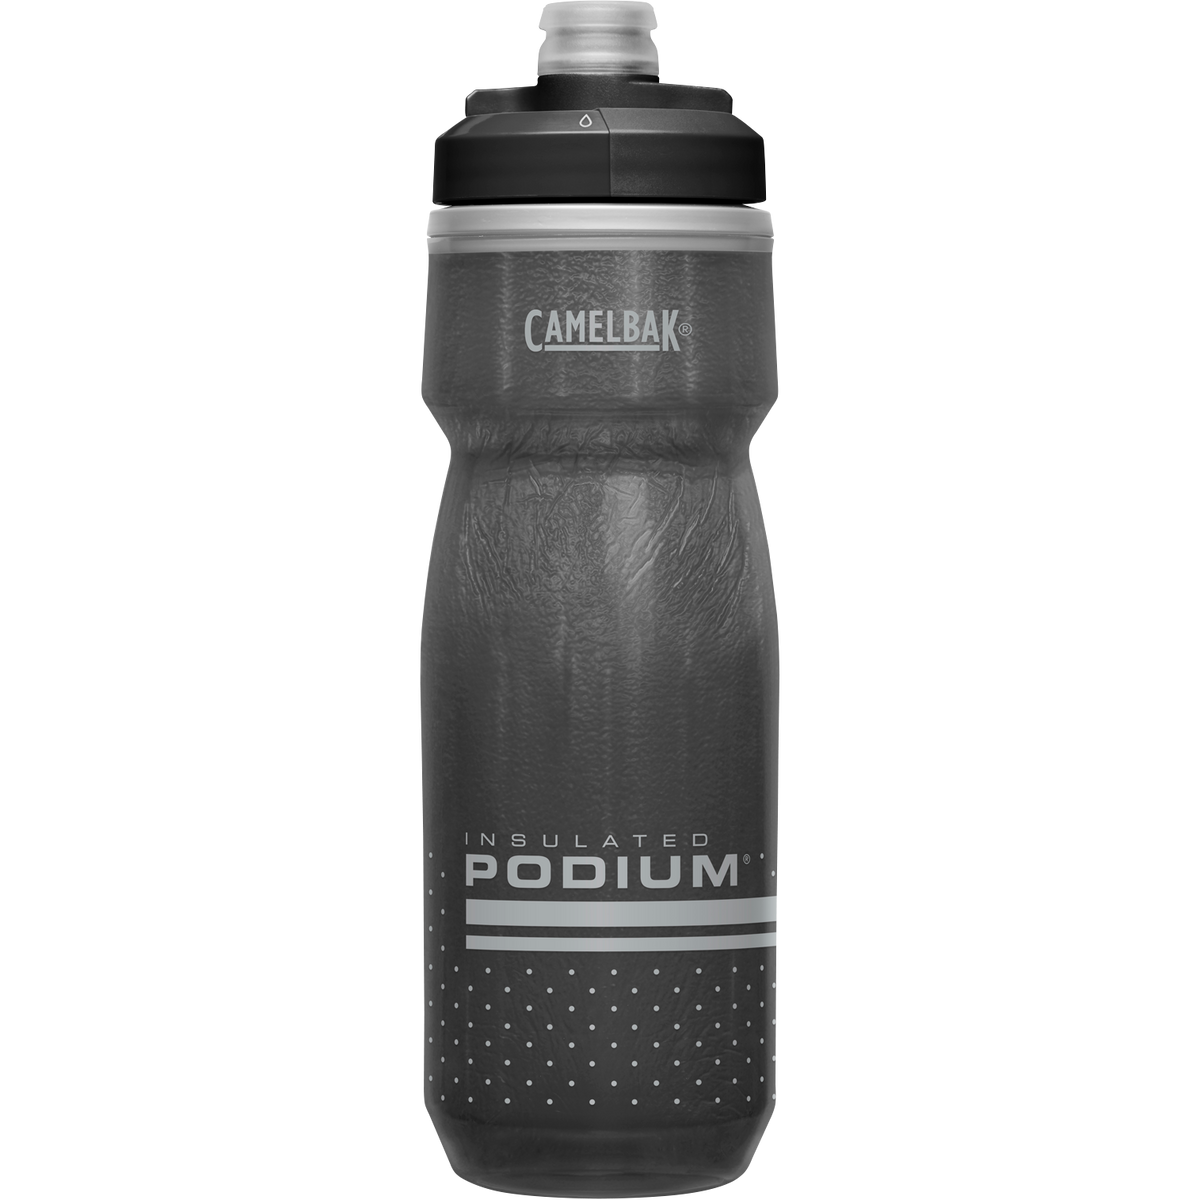 CamelBak Podium Chill 24 oz. Water Bottle, Navy/pink/grey